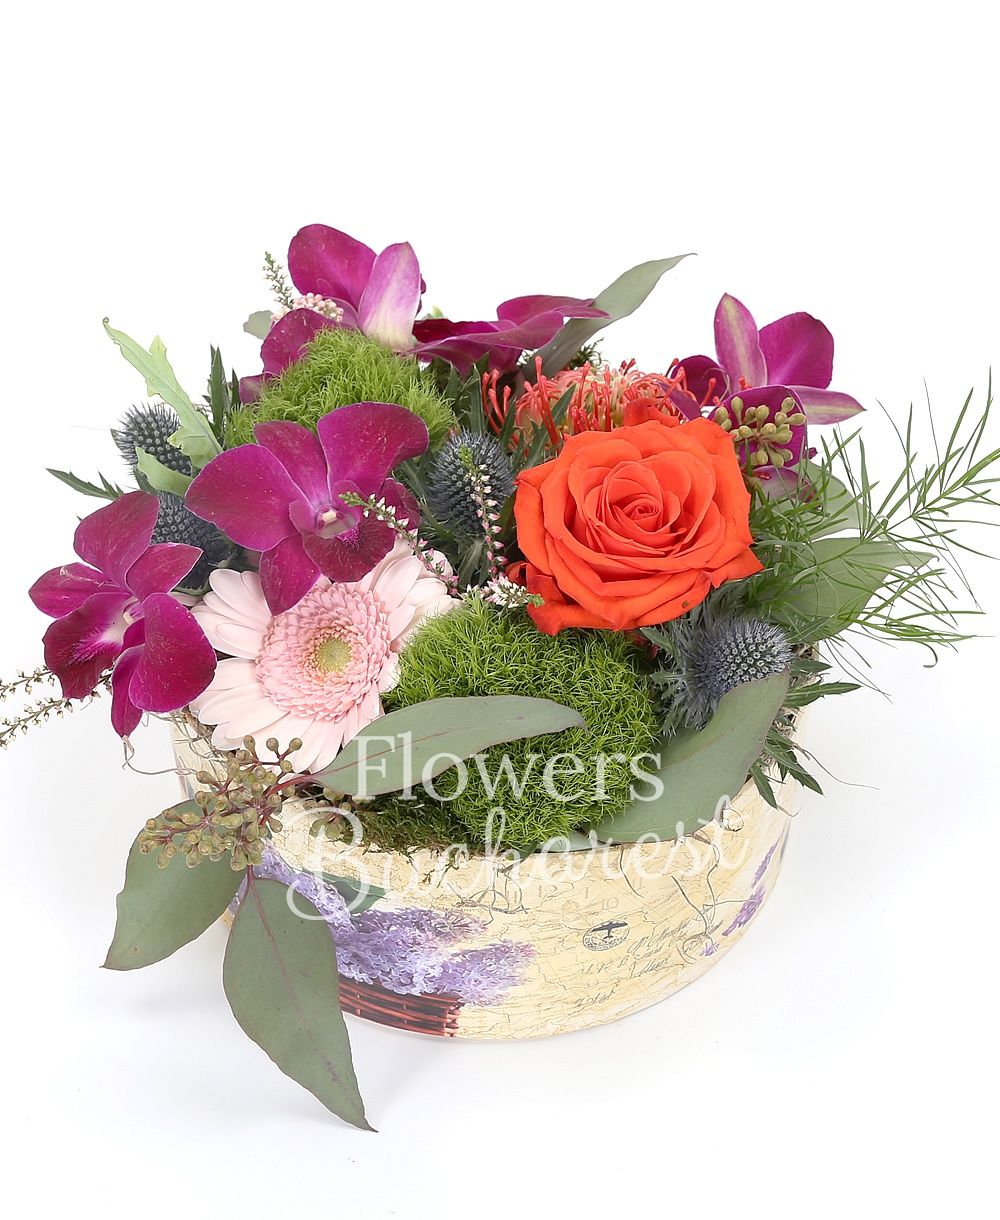 1 orange rose, protea, 1 eryngium, 1 dendrobium orchid, 1 pink gerbera, 2 green carnations, greenery